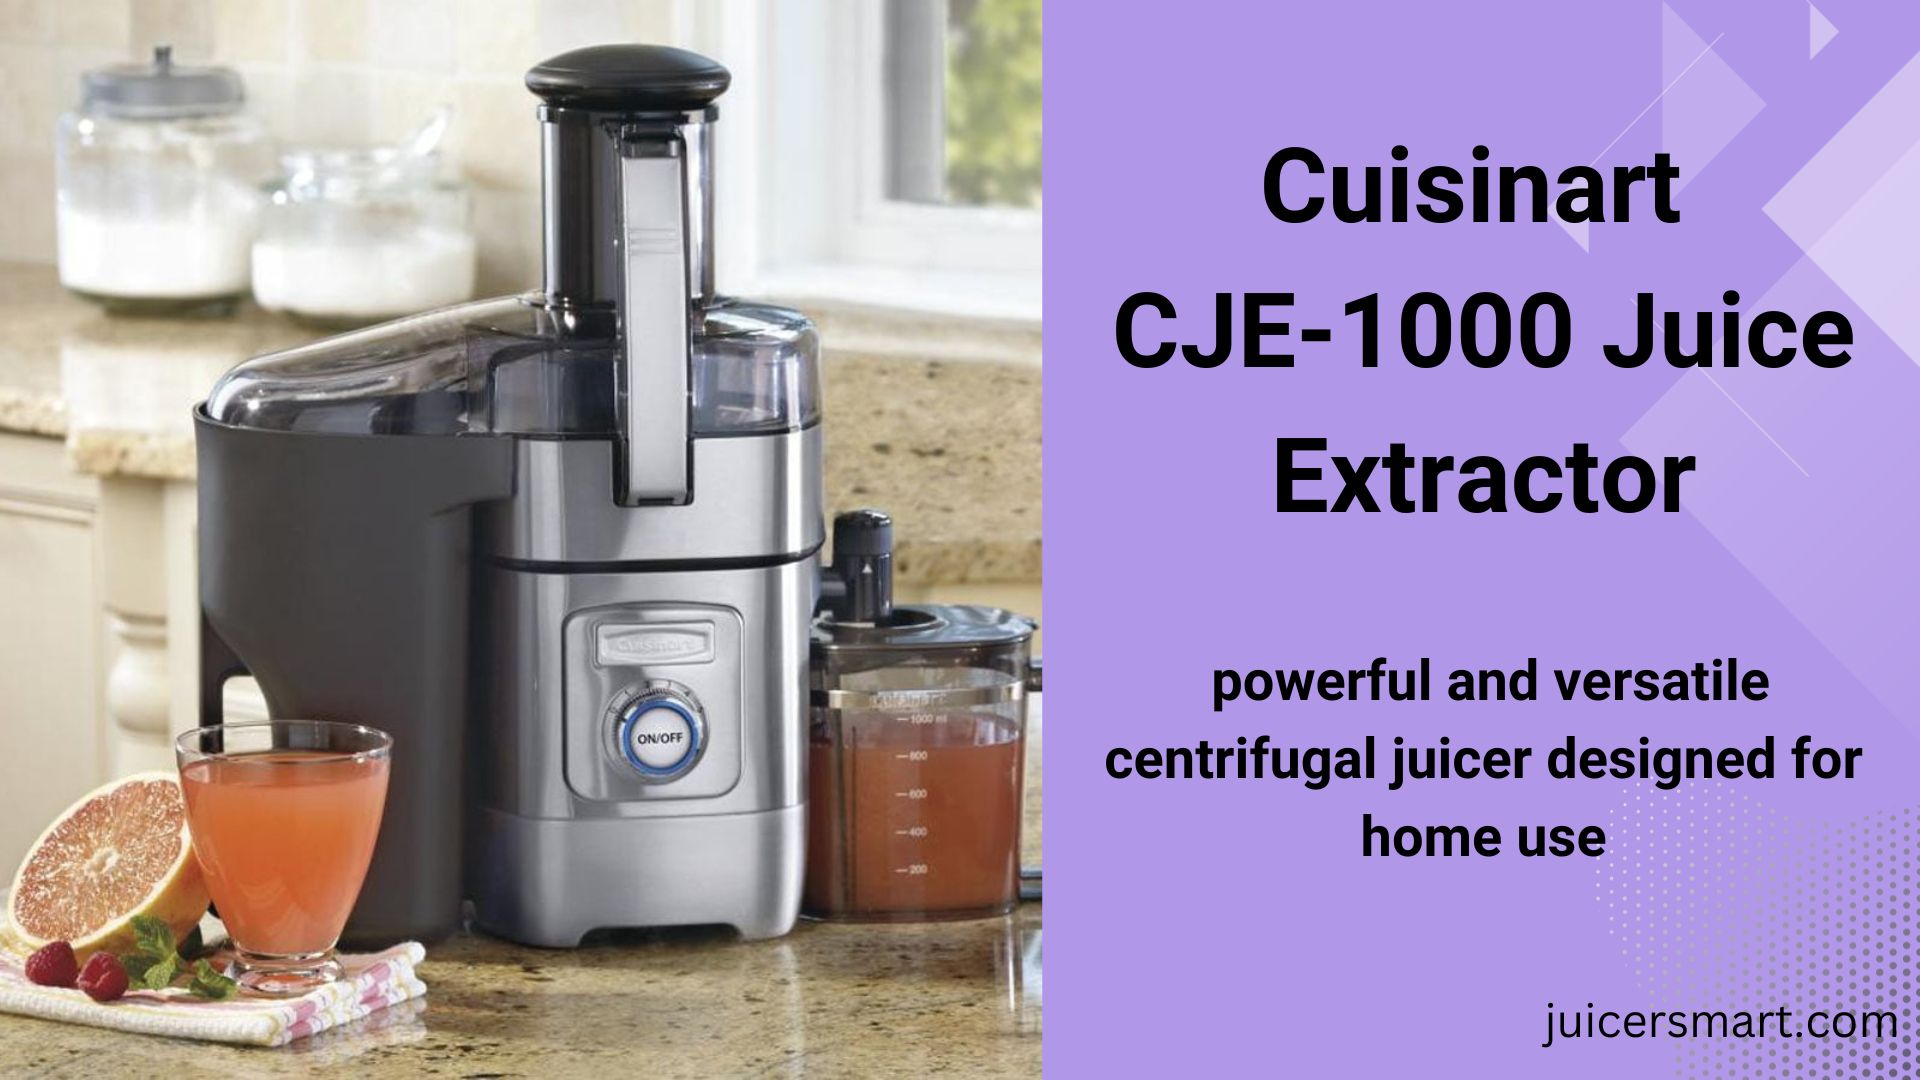 Cuisinart CJE-1000 Juice Extractor